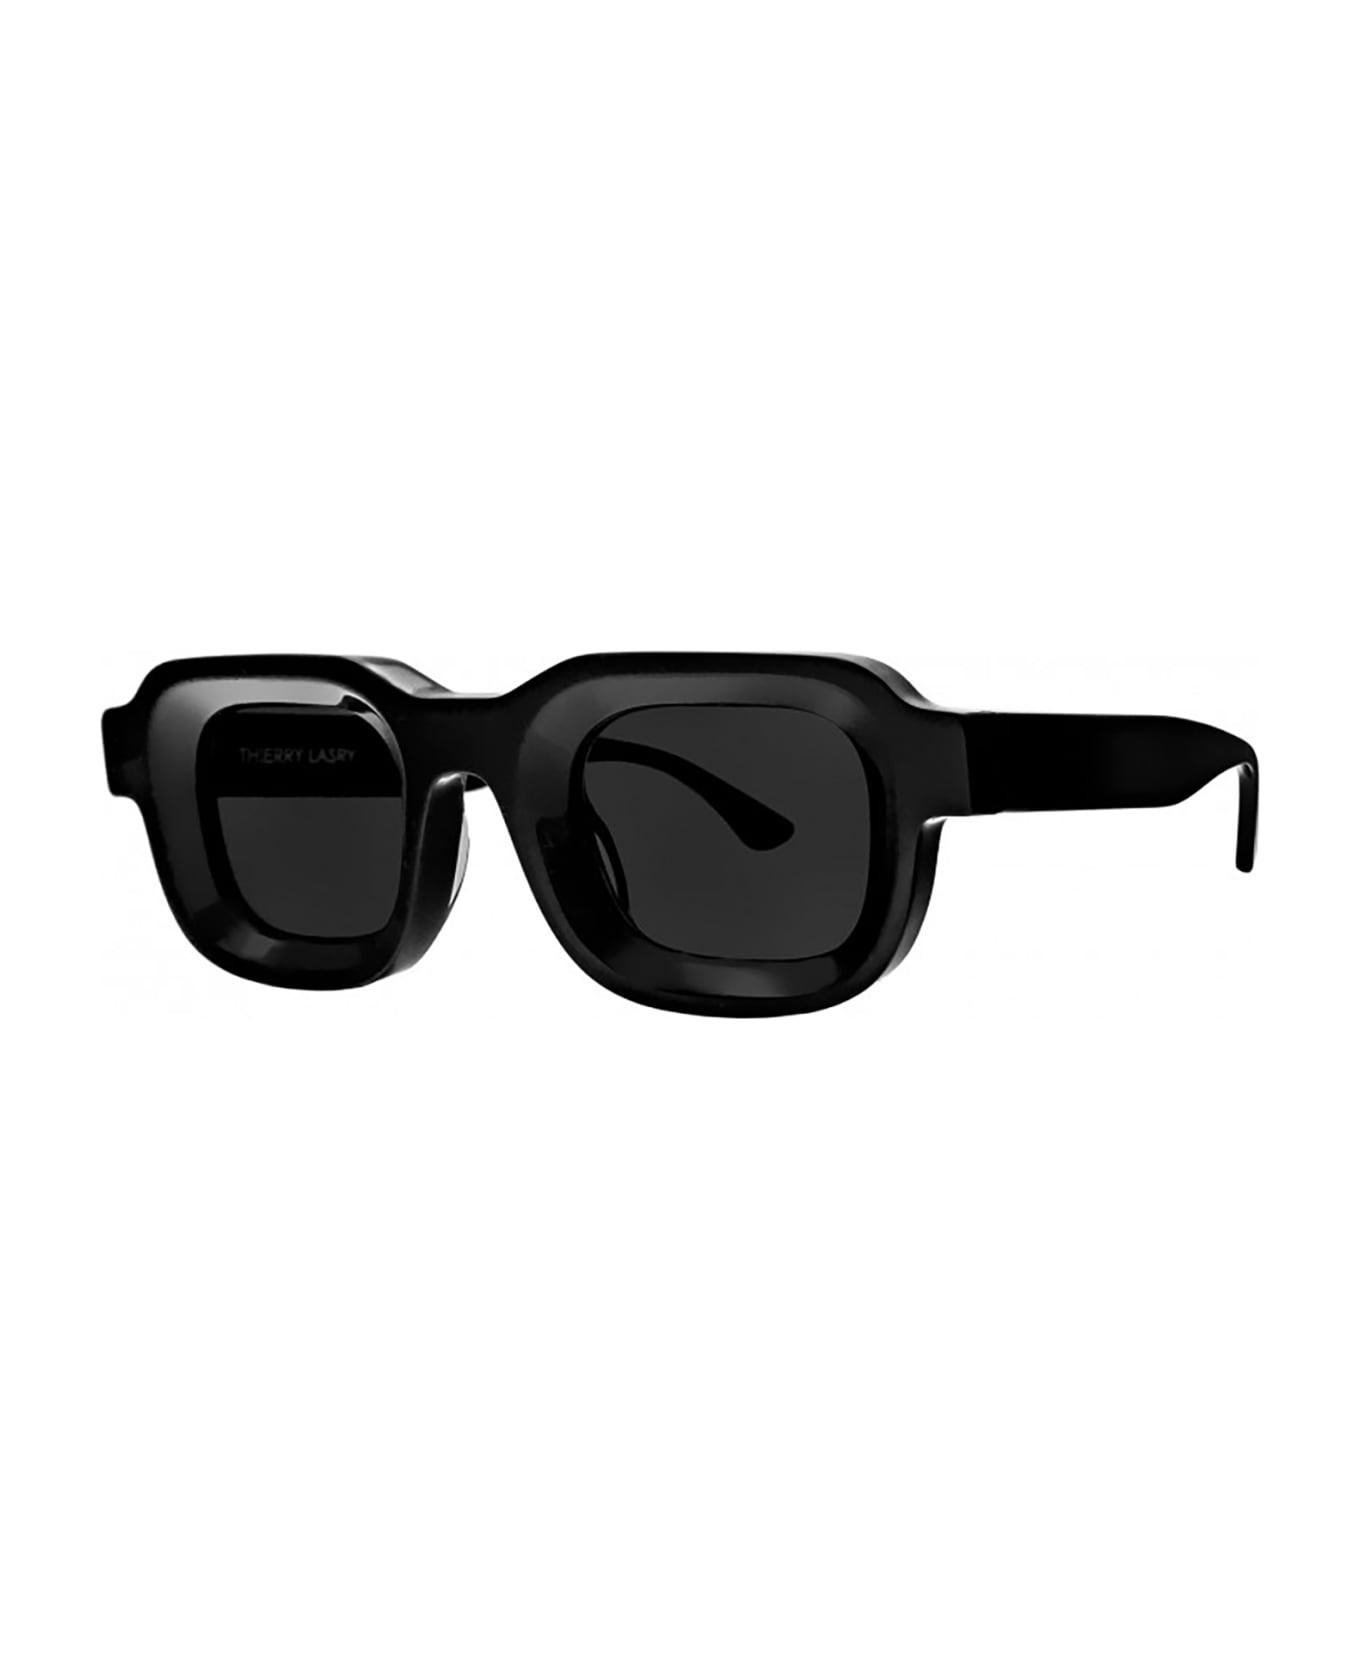 Thierry Lasry NARCOTY Sunglasses サングラス